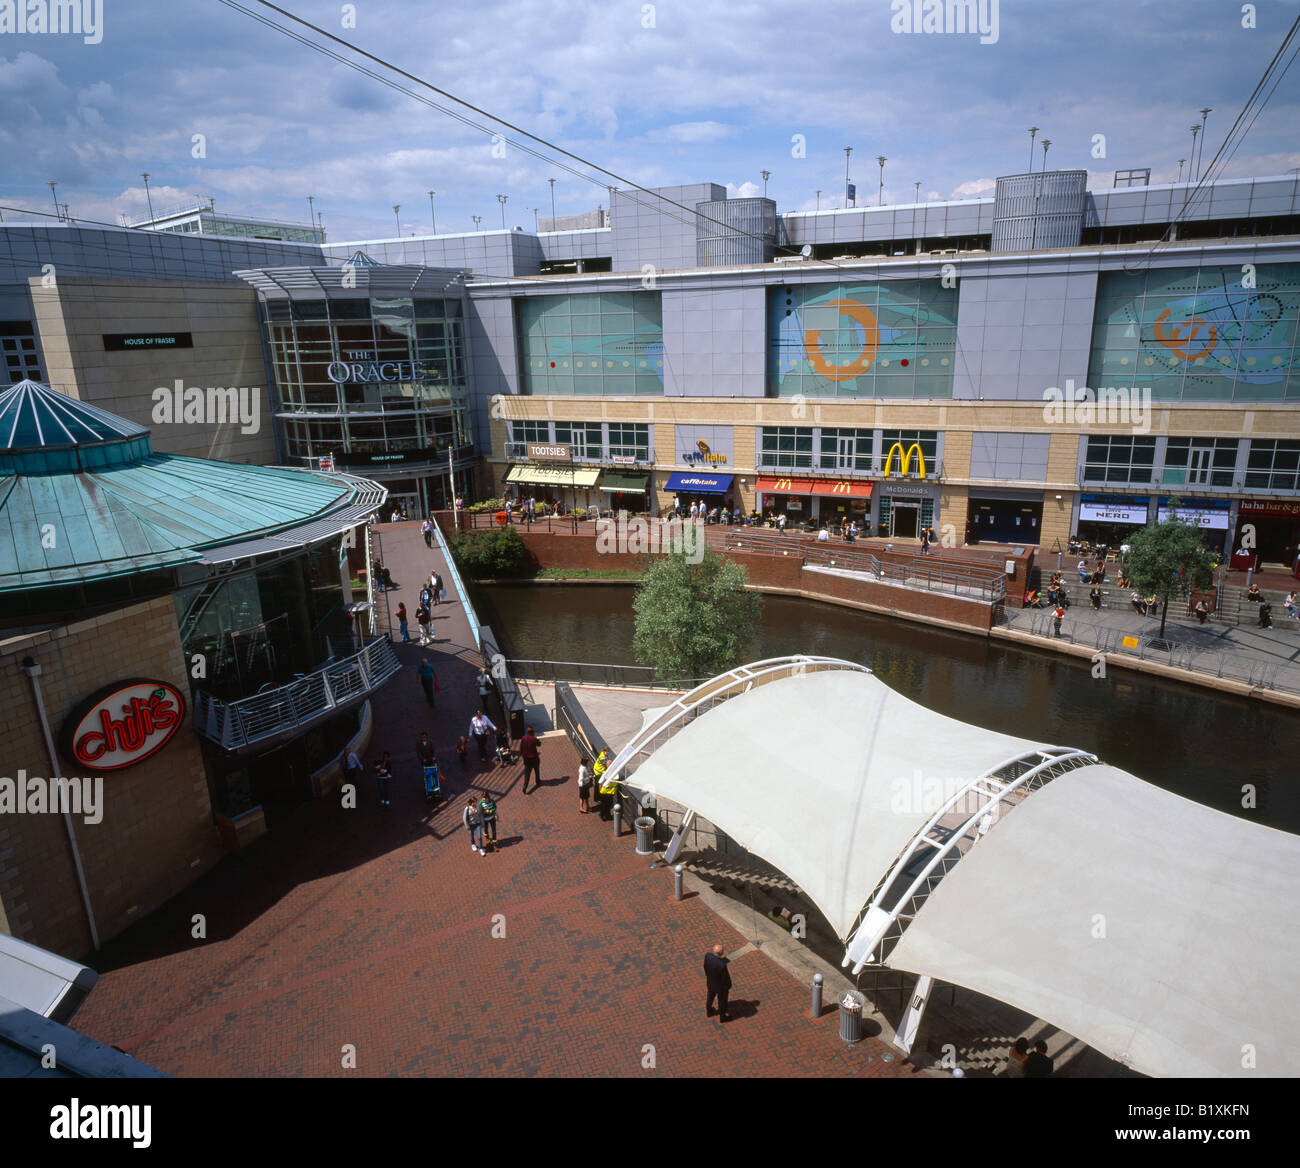 The Oracle shopping center. Reading, Berkshire, England, UK. Stock Photo